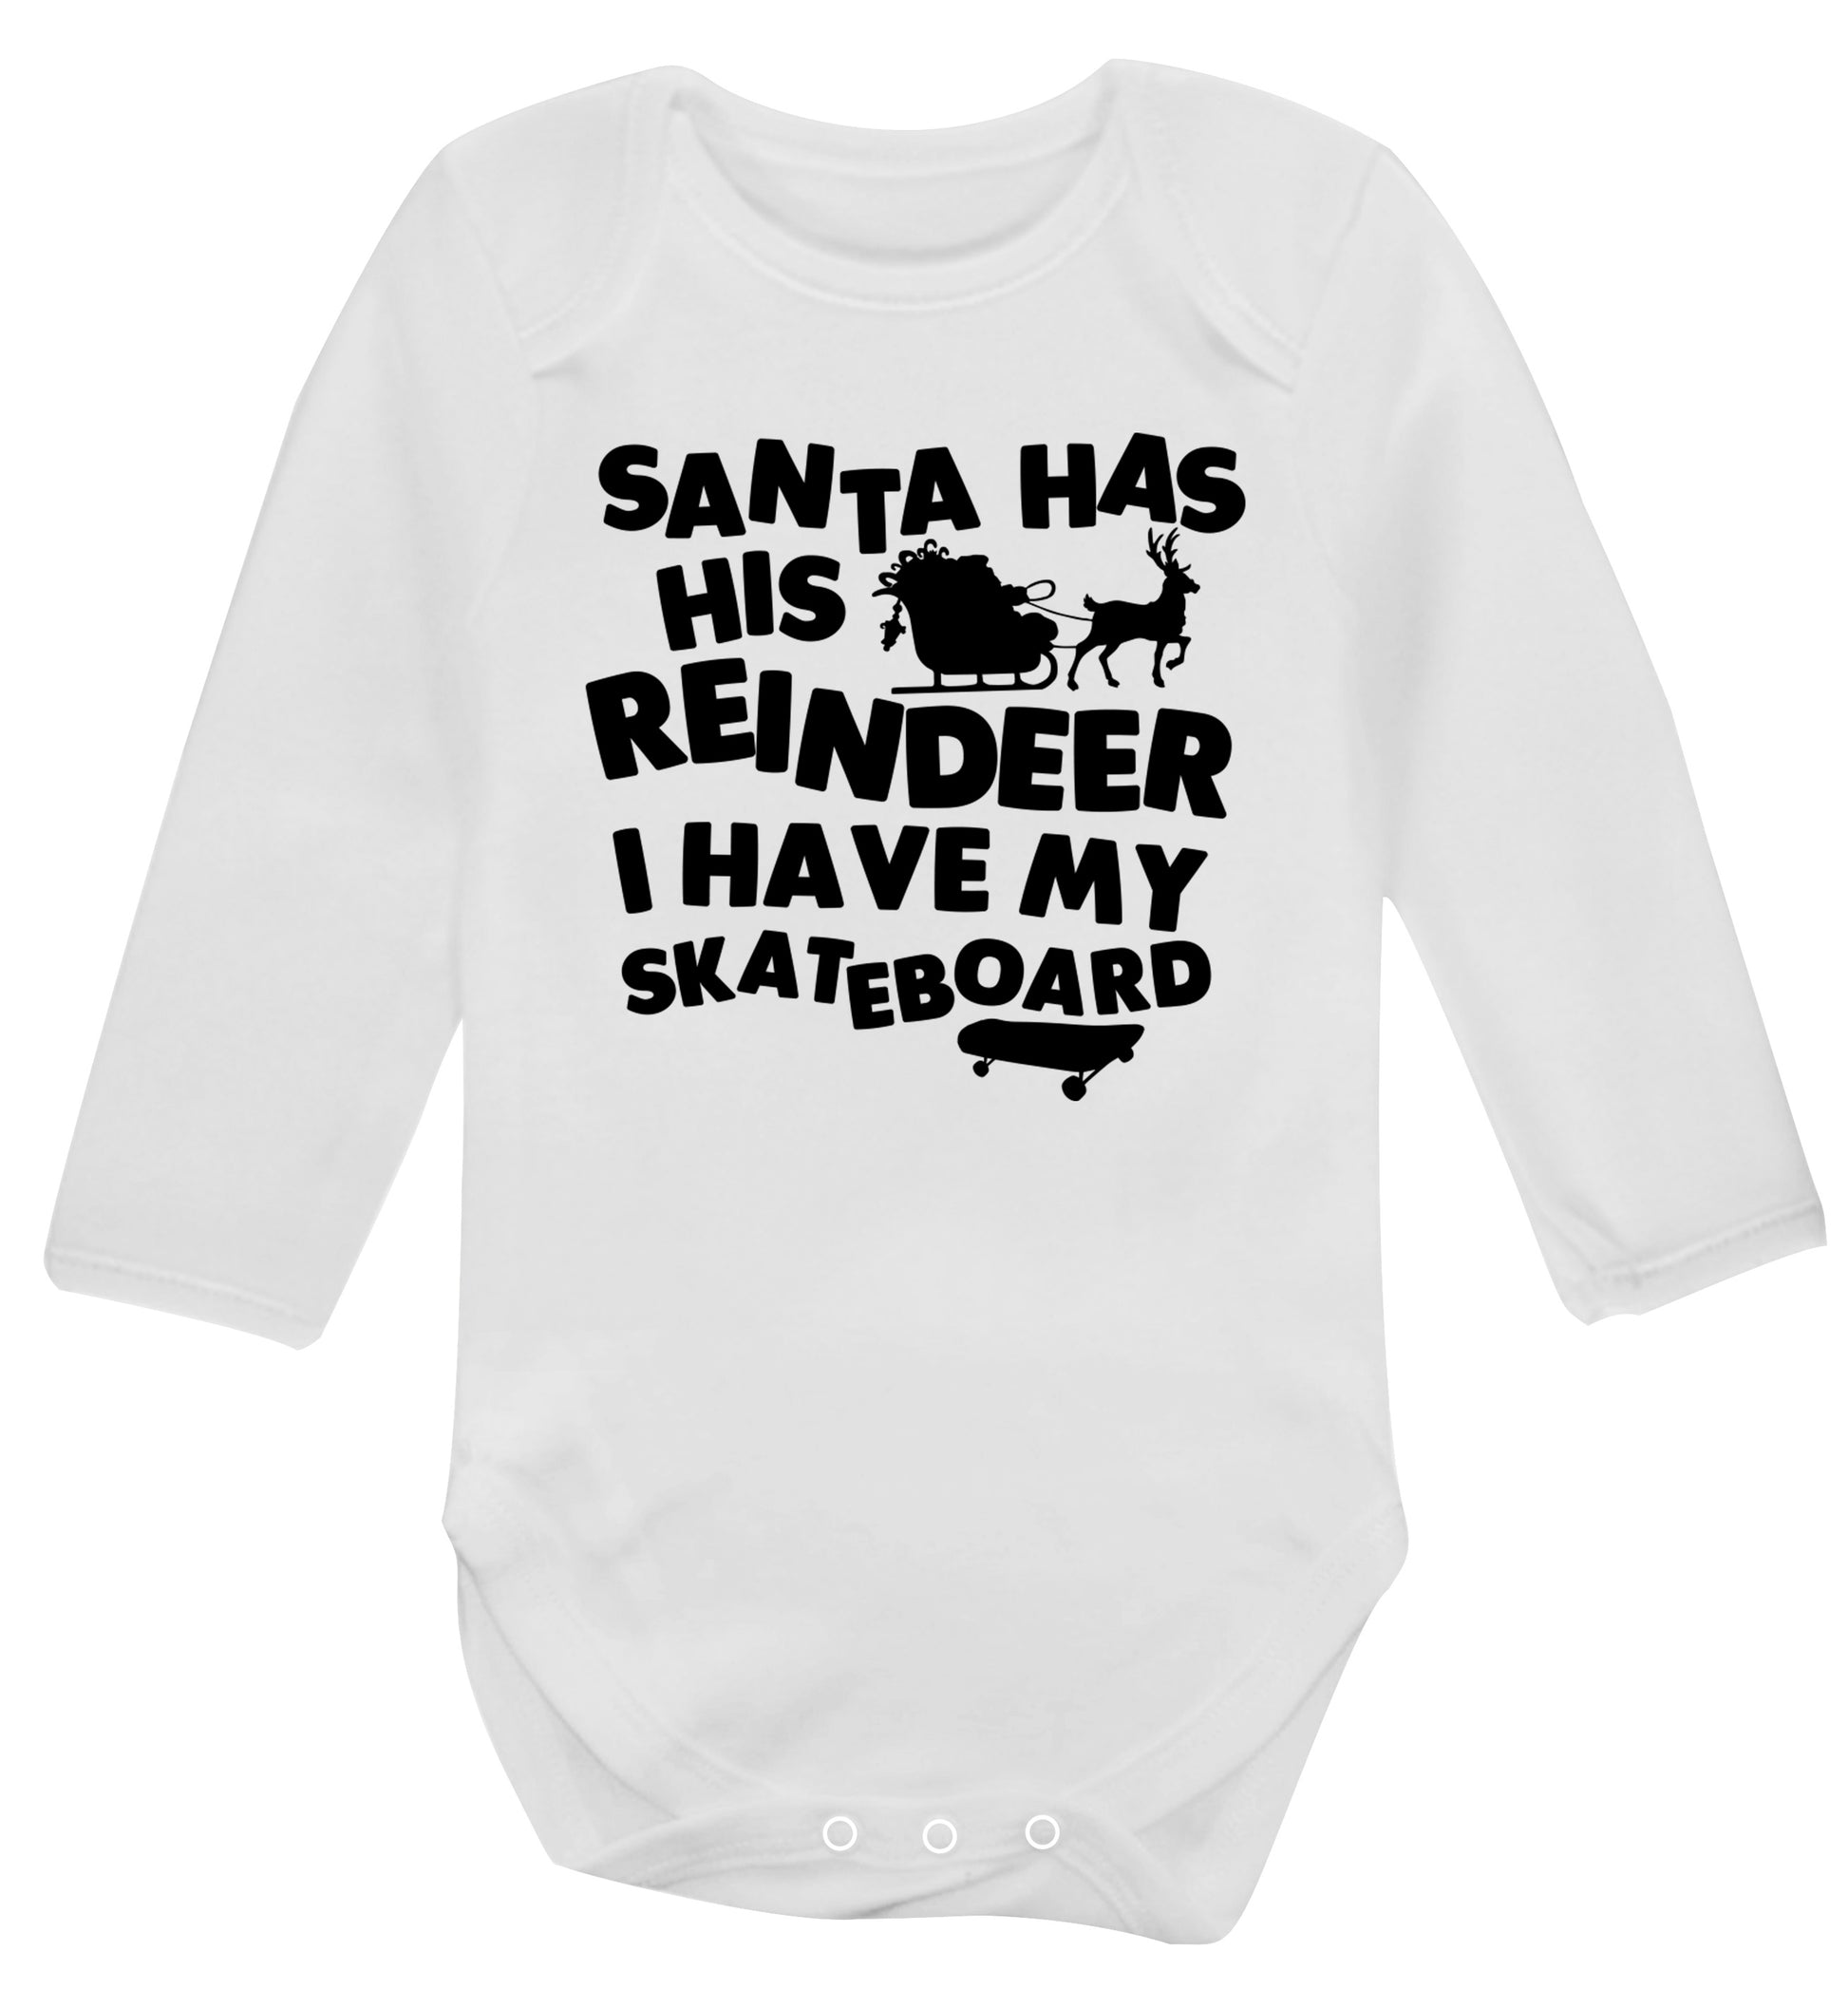 Santa has his reindeer I have my skateboard Baby Vest long sleeved white 6-12 months